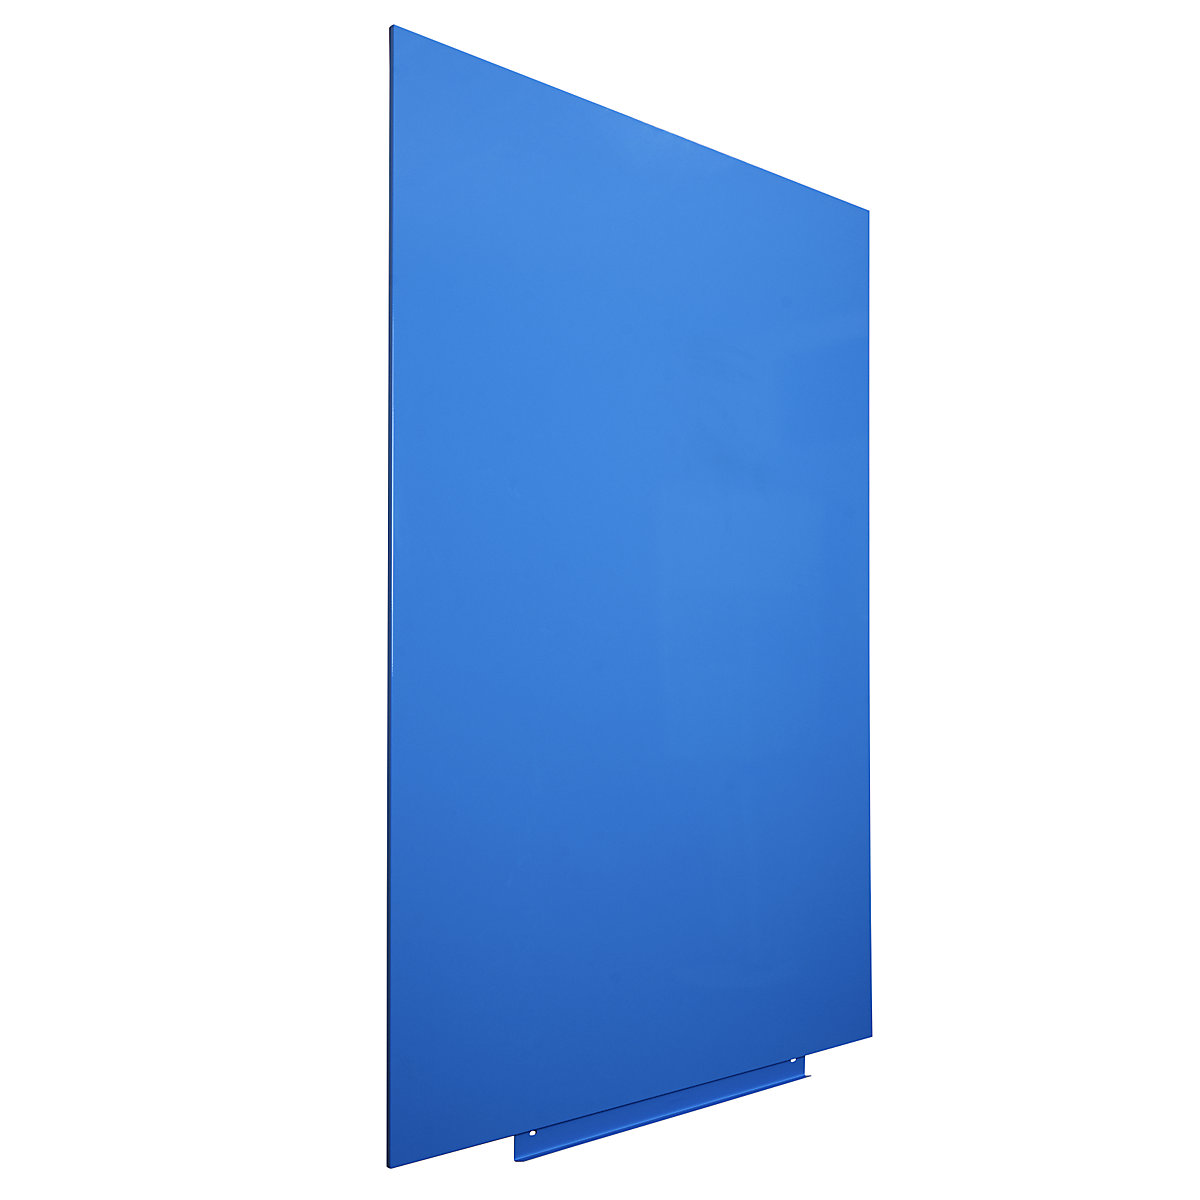 Whiteboard-Modul, BASIC-Version – Stahlblech, lackiert, BxH 1000 x 1500 mm, pastellblau-18